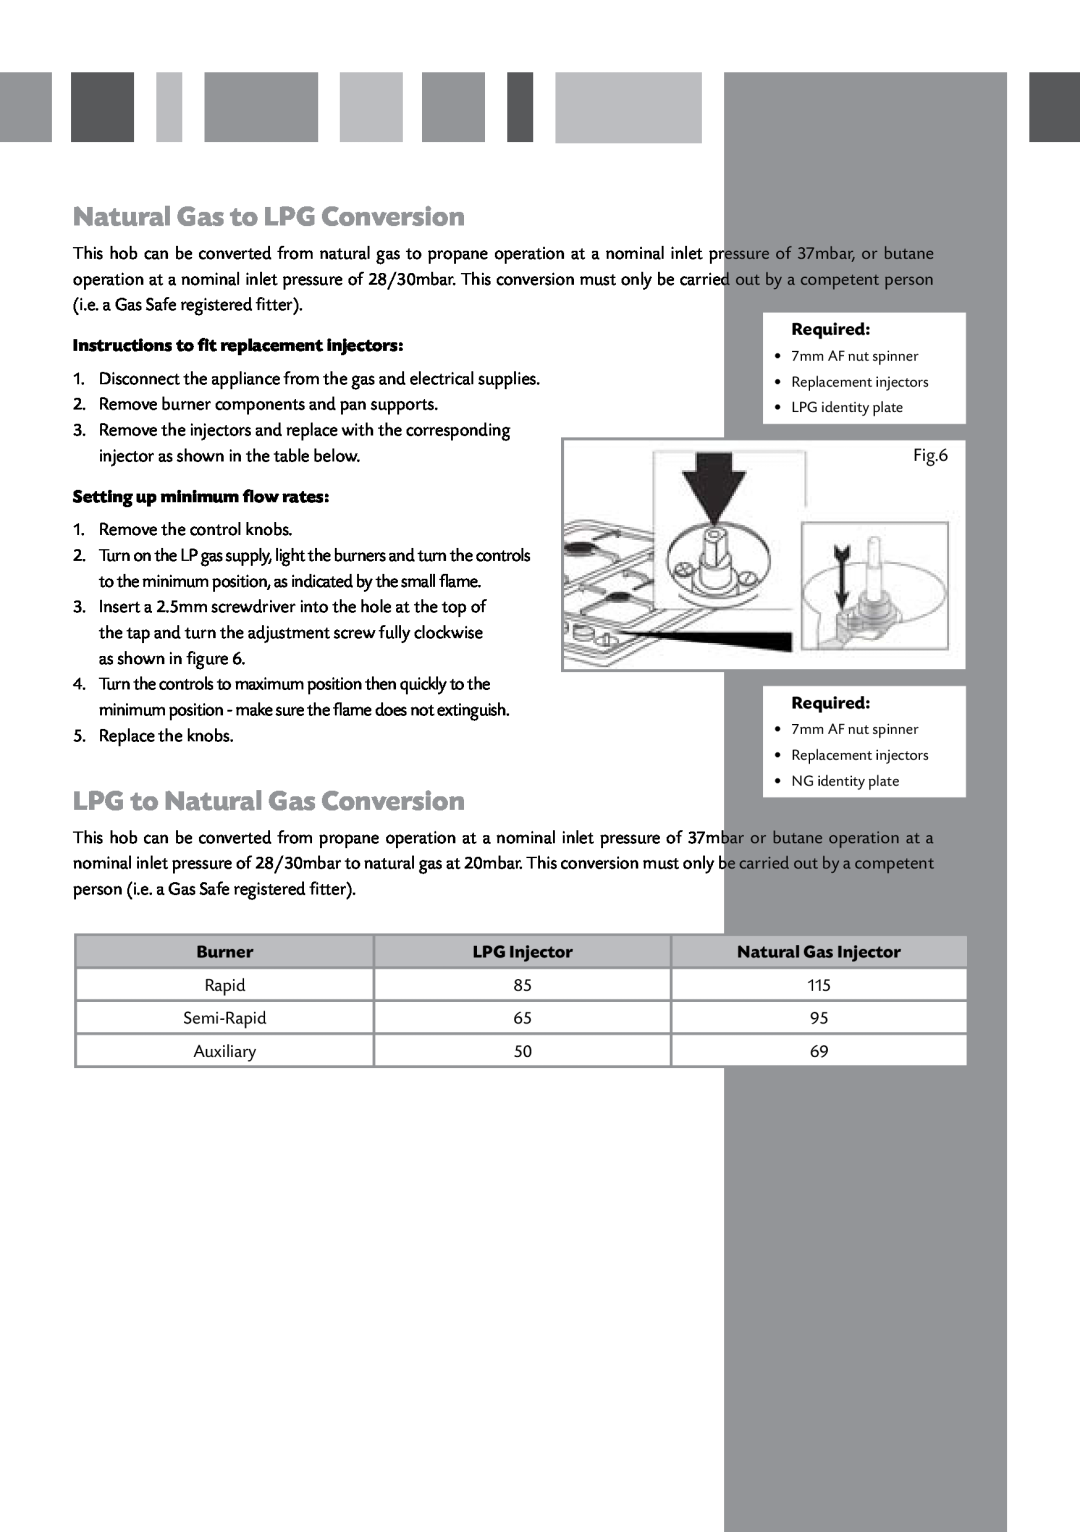 CDA HCG520 Natural Gas to LPG Conversion, LPG to Natural Gas Conversion, Instructions to fit replacement injectors, Burner 